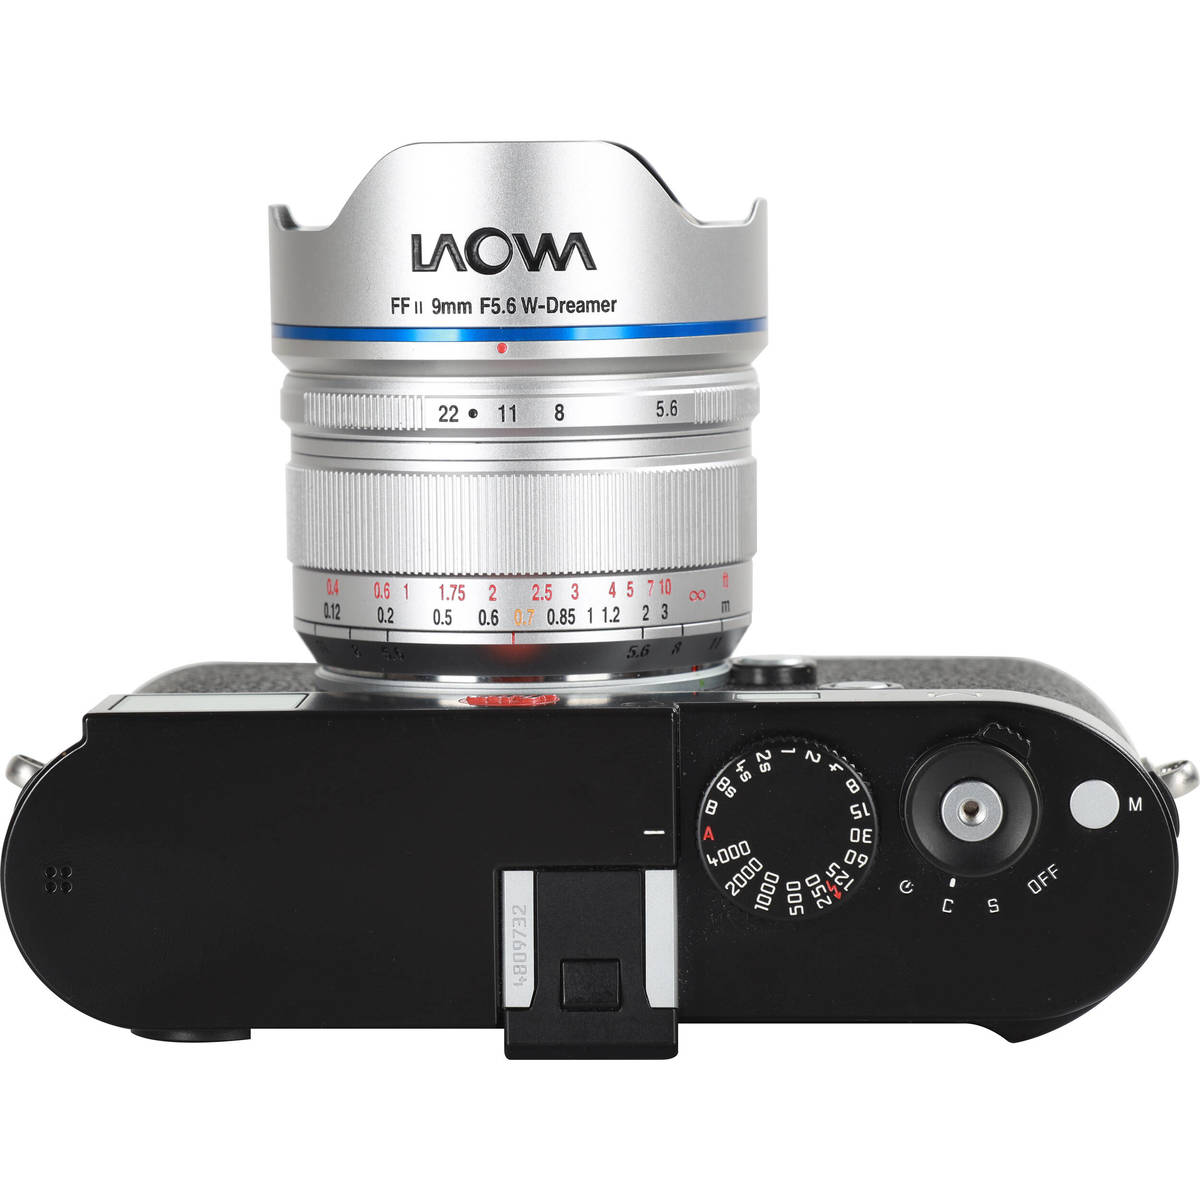 6. Laowa Lens 9mm f/5.6 W-Dreamer FF RL (Leica M) Silver